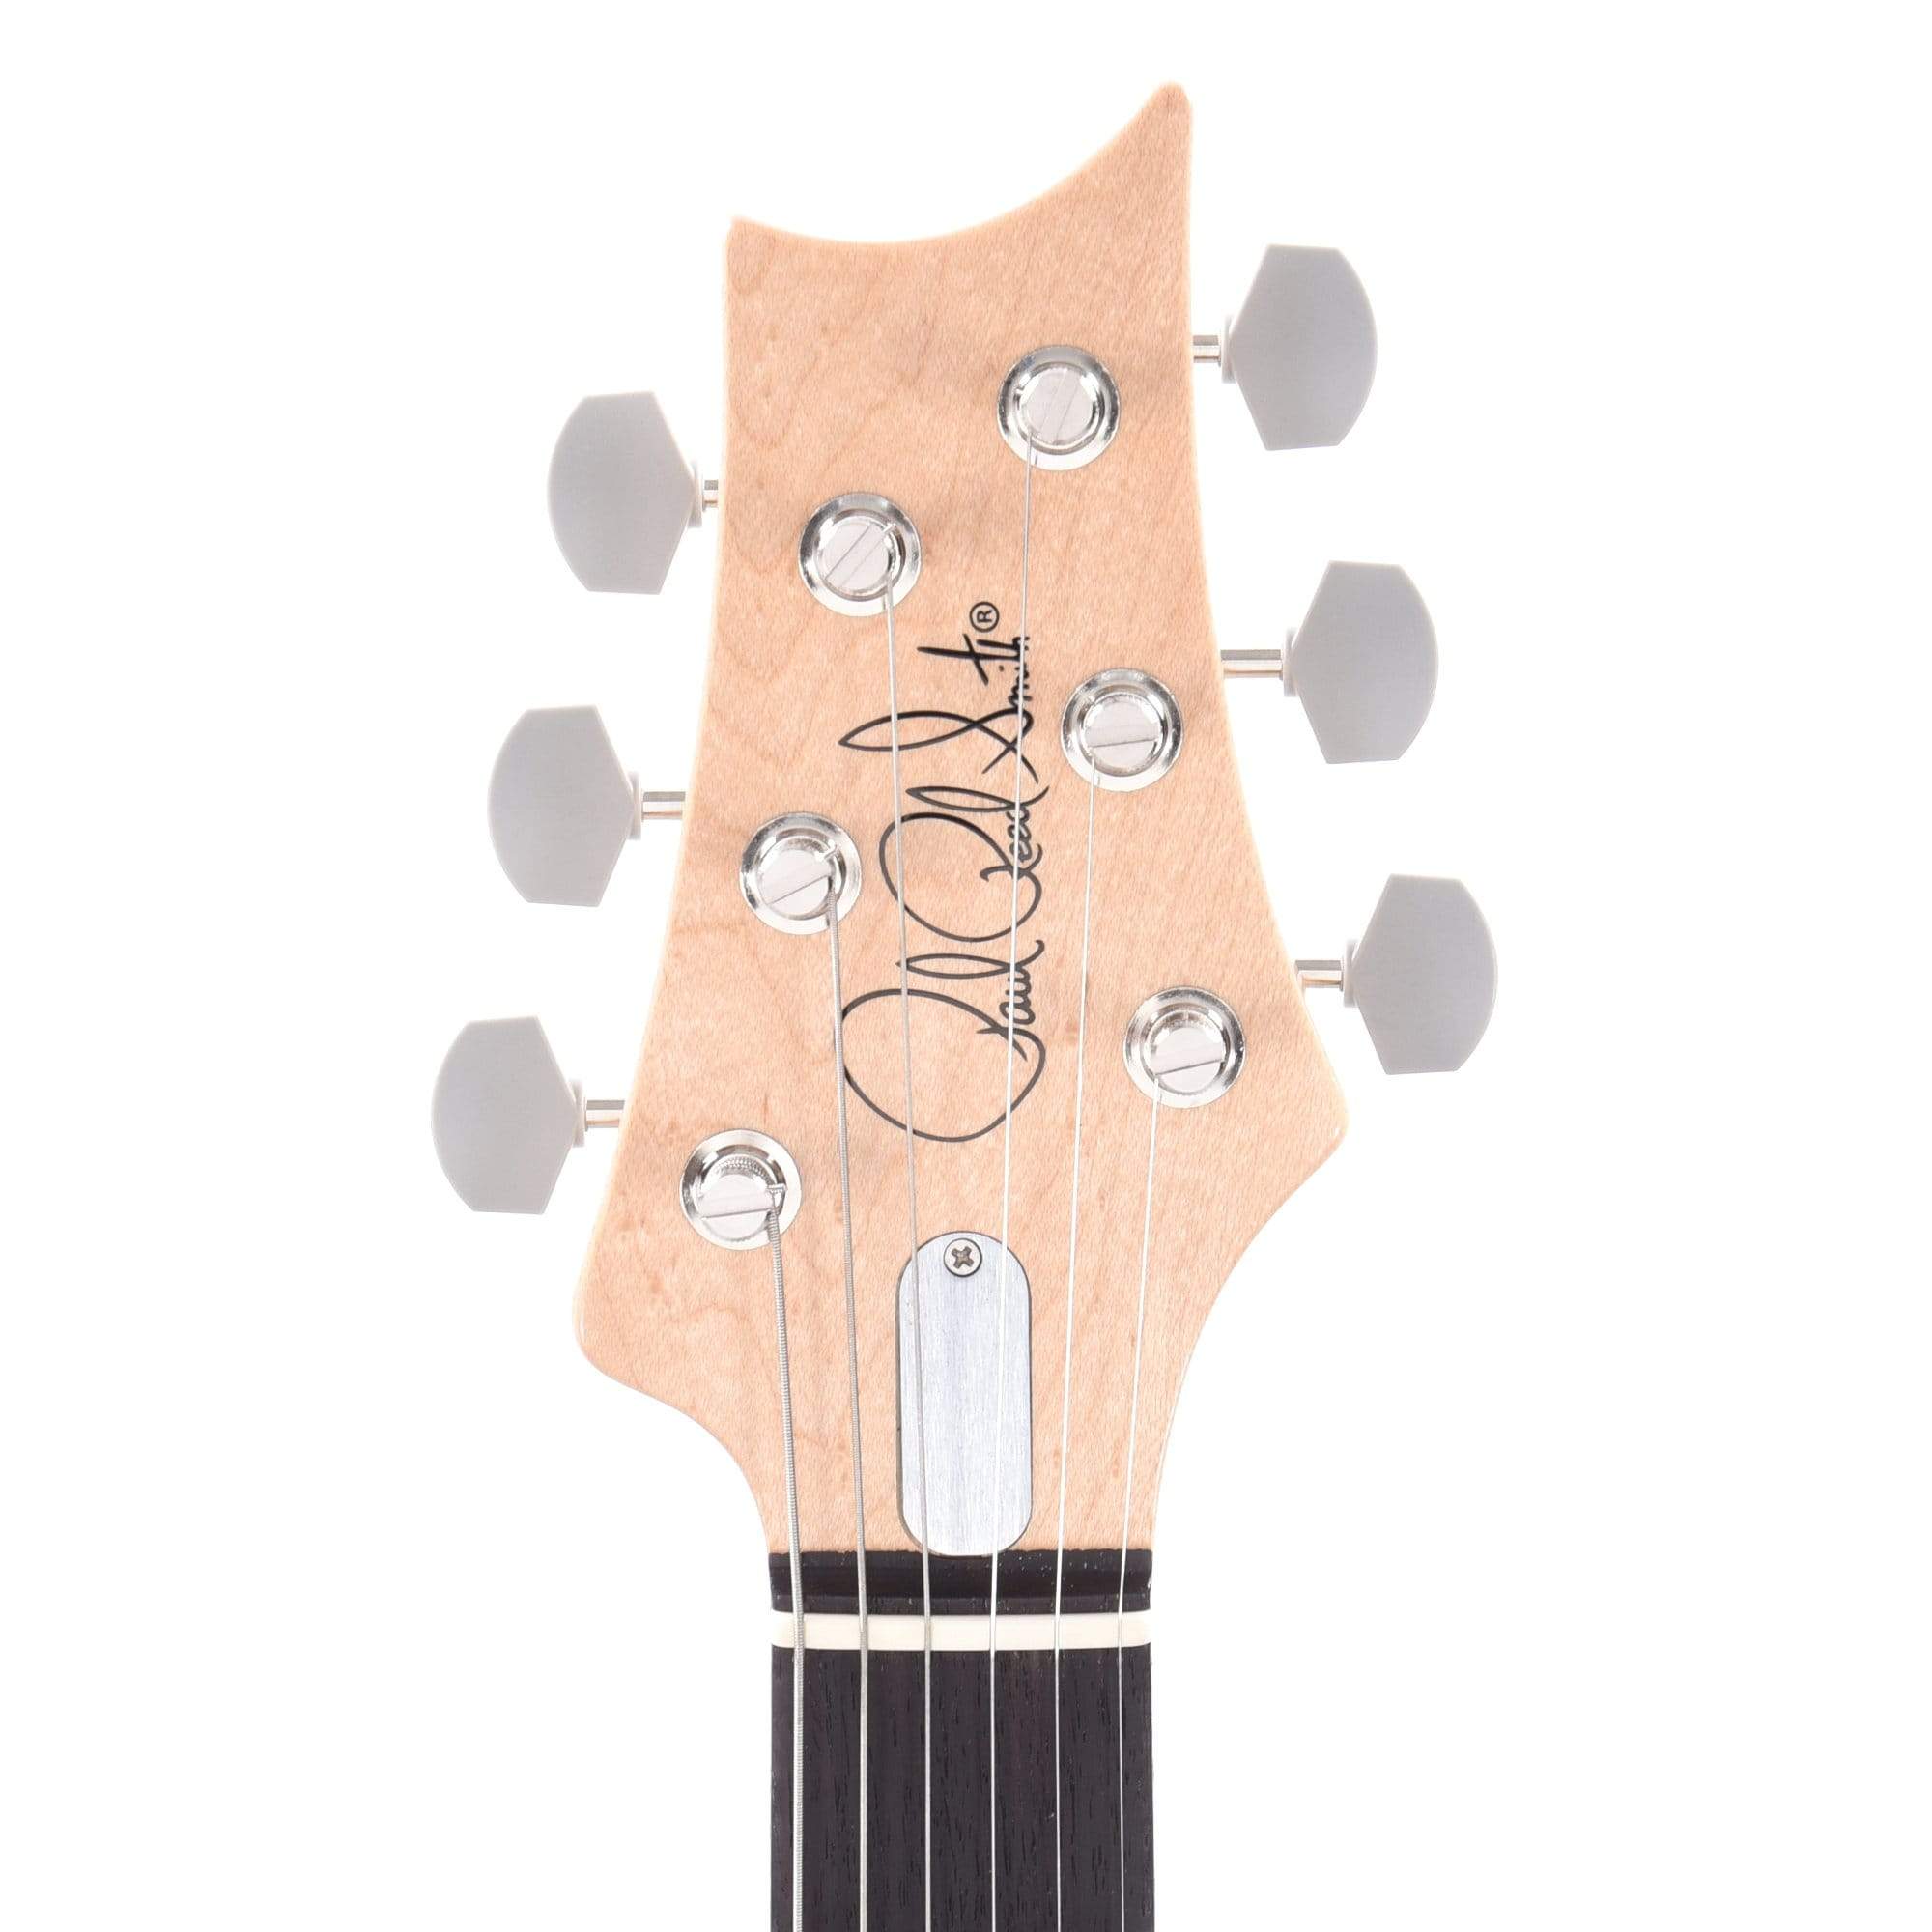 PRS Silver Sky John Mayer Polar Blue Electric Guitars / Solid Body